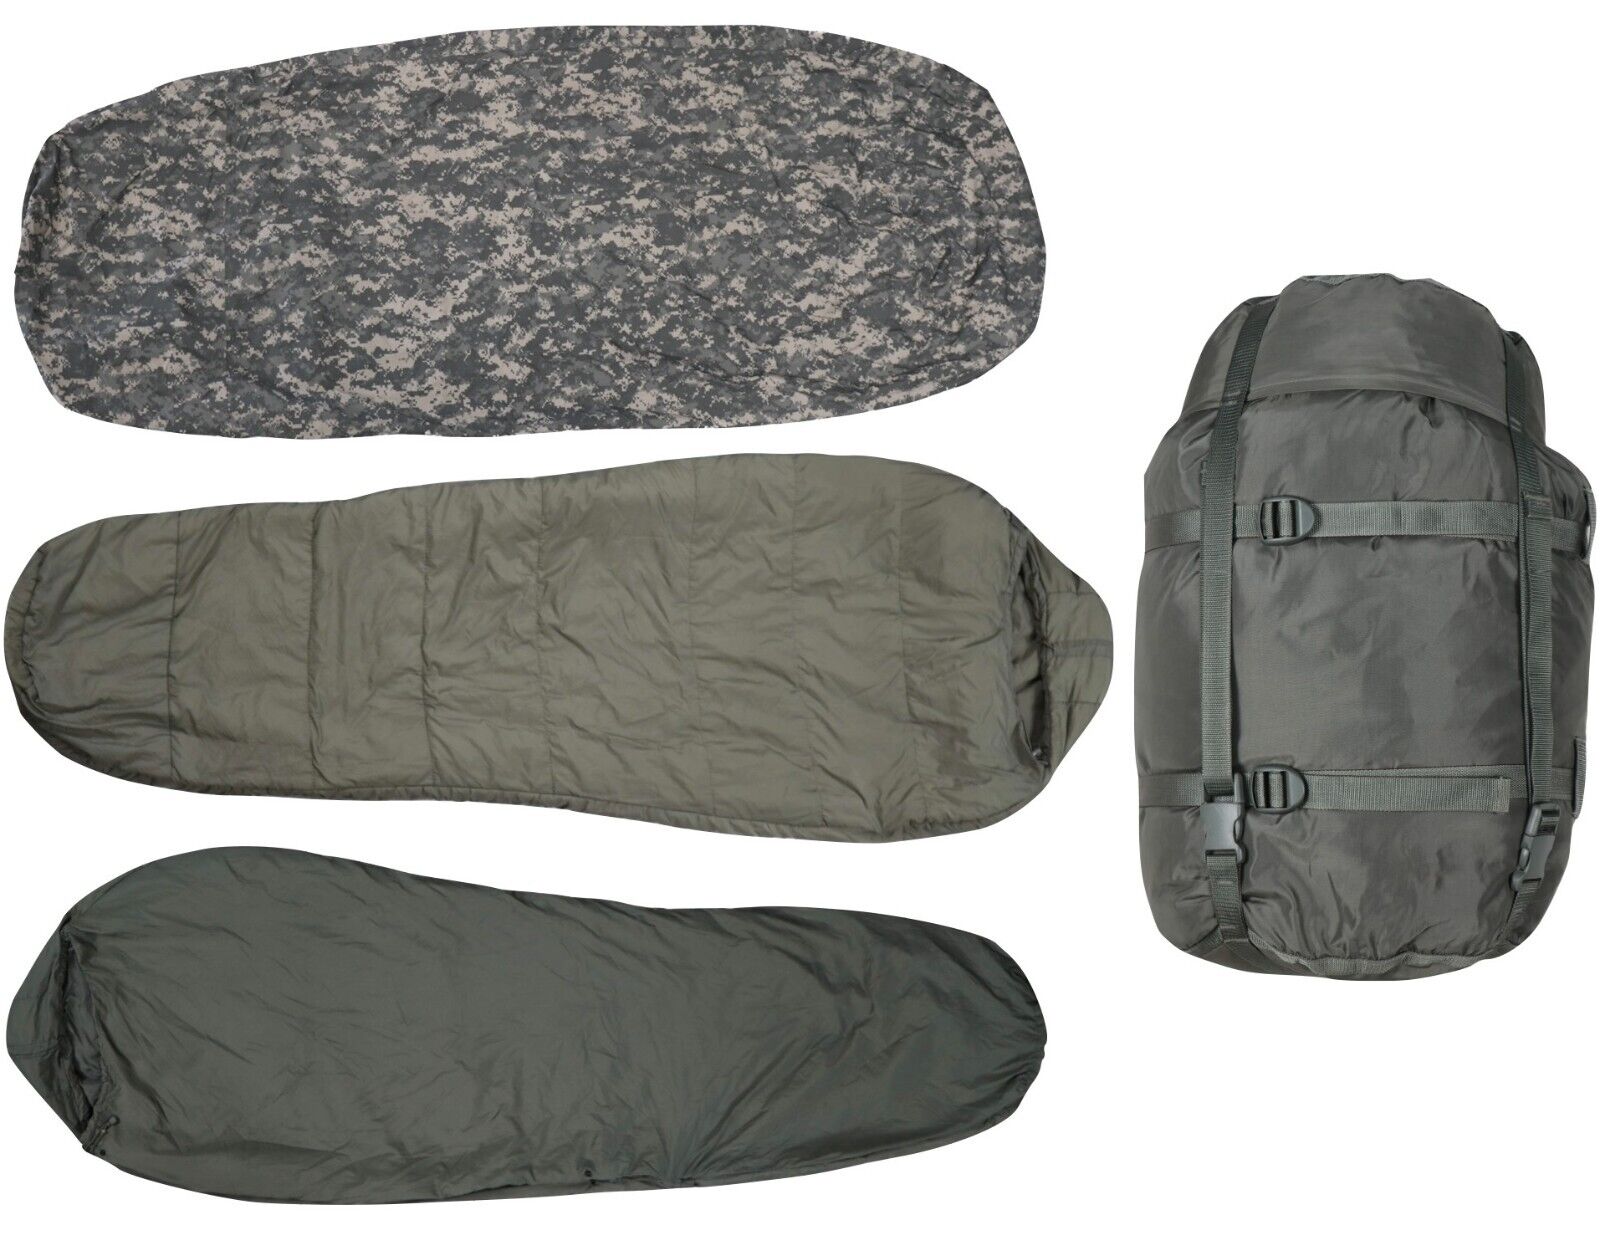 DAMAGED Complete MSS Modular Sleep System w Sleeping Bags Bivy Cover Stuff Sacks